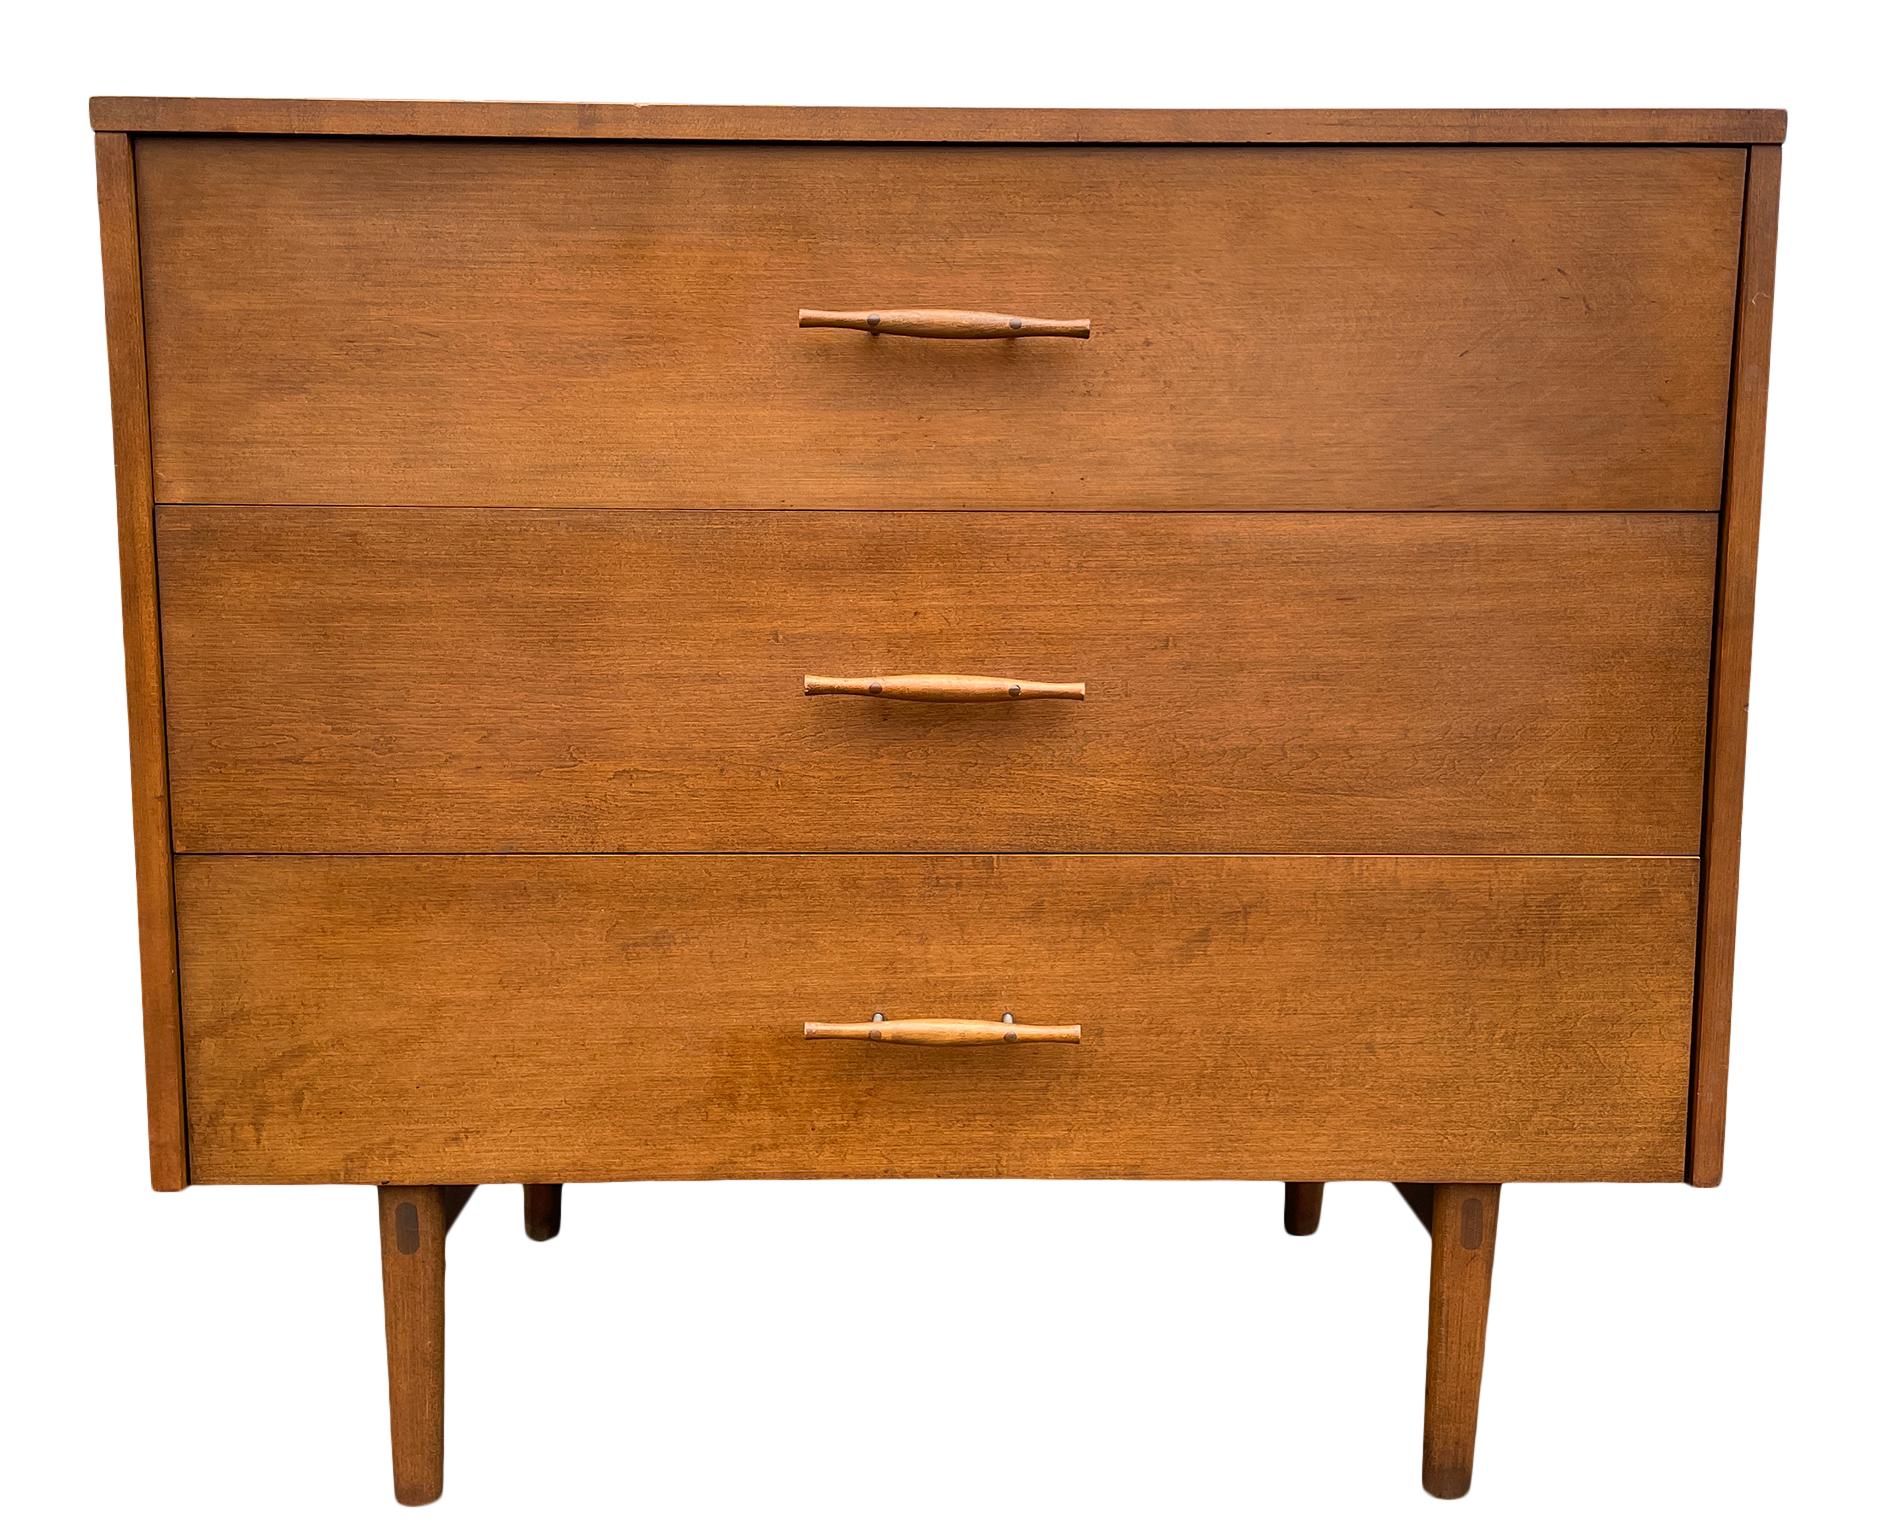 Maple Midcentury Modern Paul McCobb 3-Drawer Dresser #1508 Walnut Finish Pull Handles For Sale